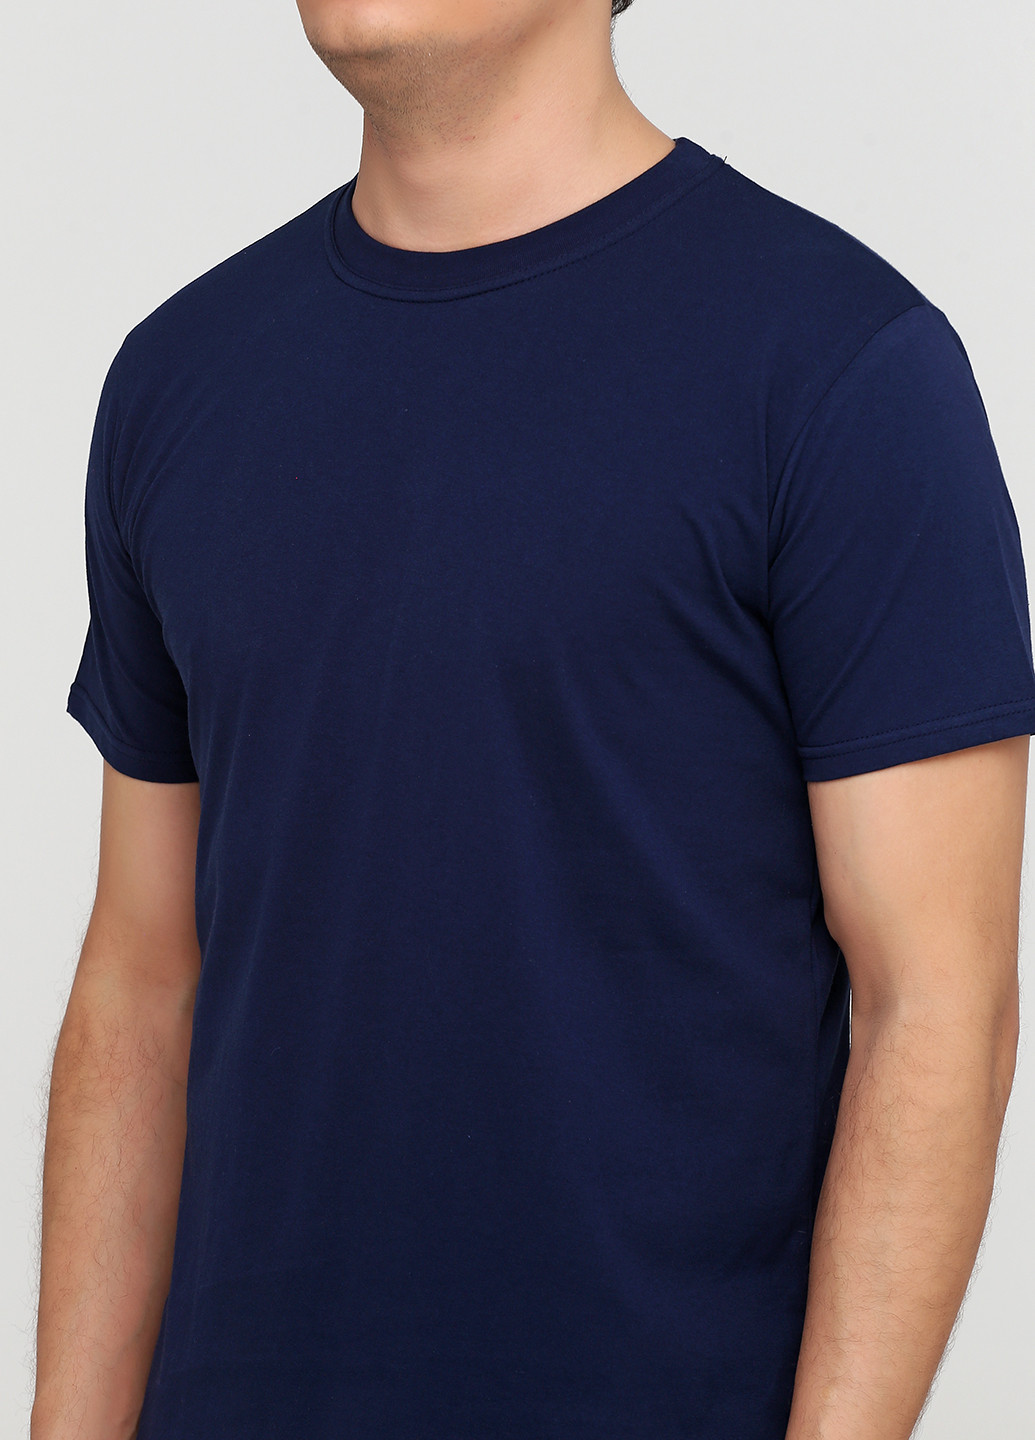 Темно-синяя футболка мужская 19м319-17 синяя(електро) с коротким рукавом Malta